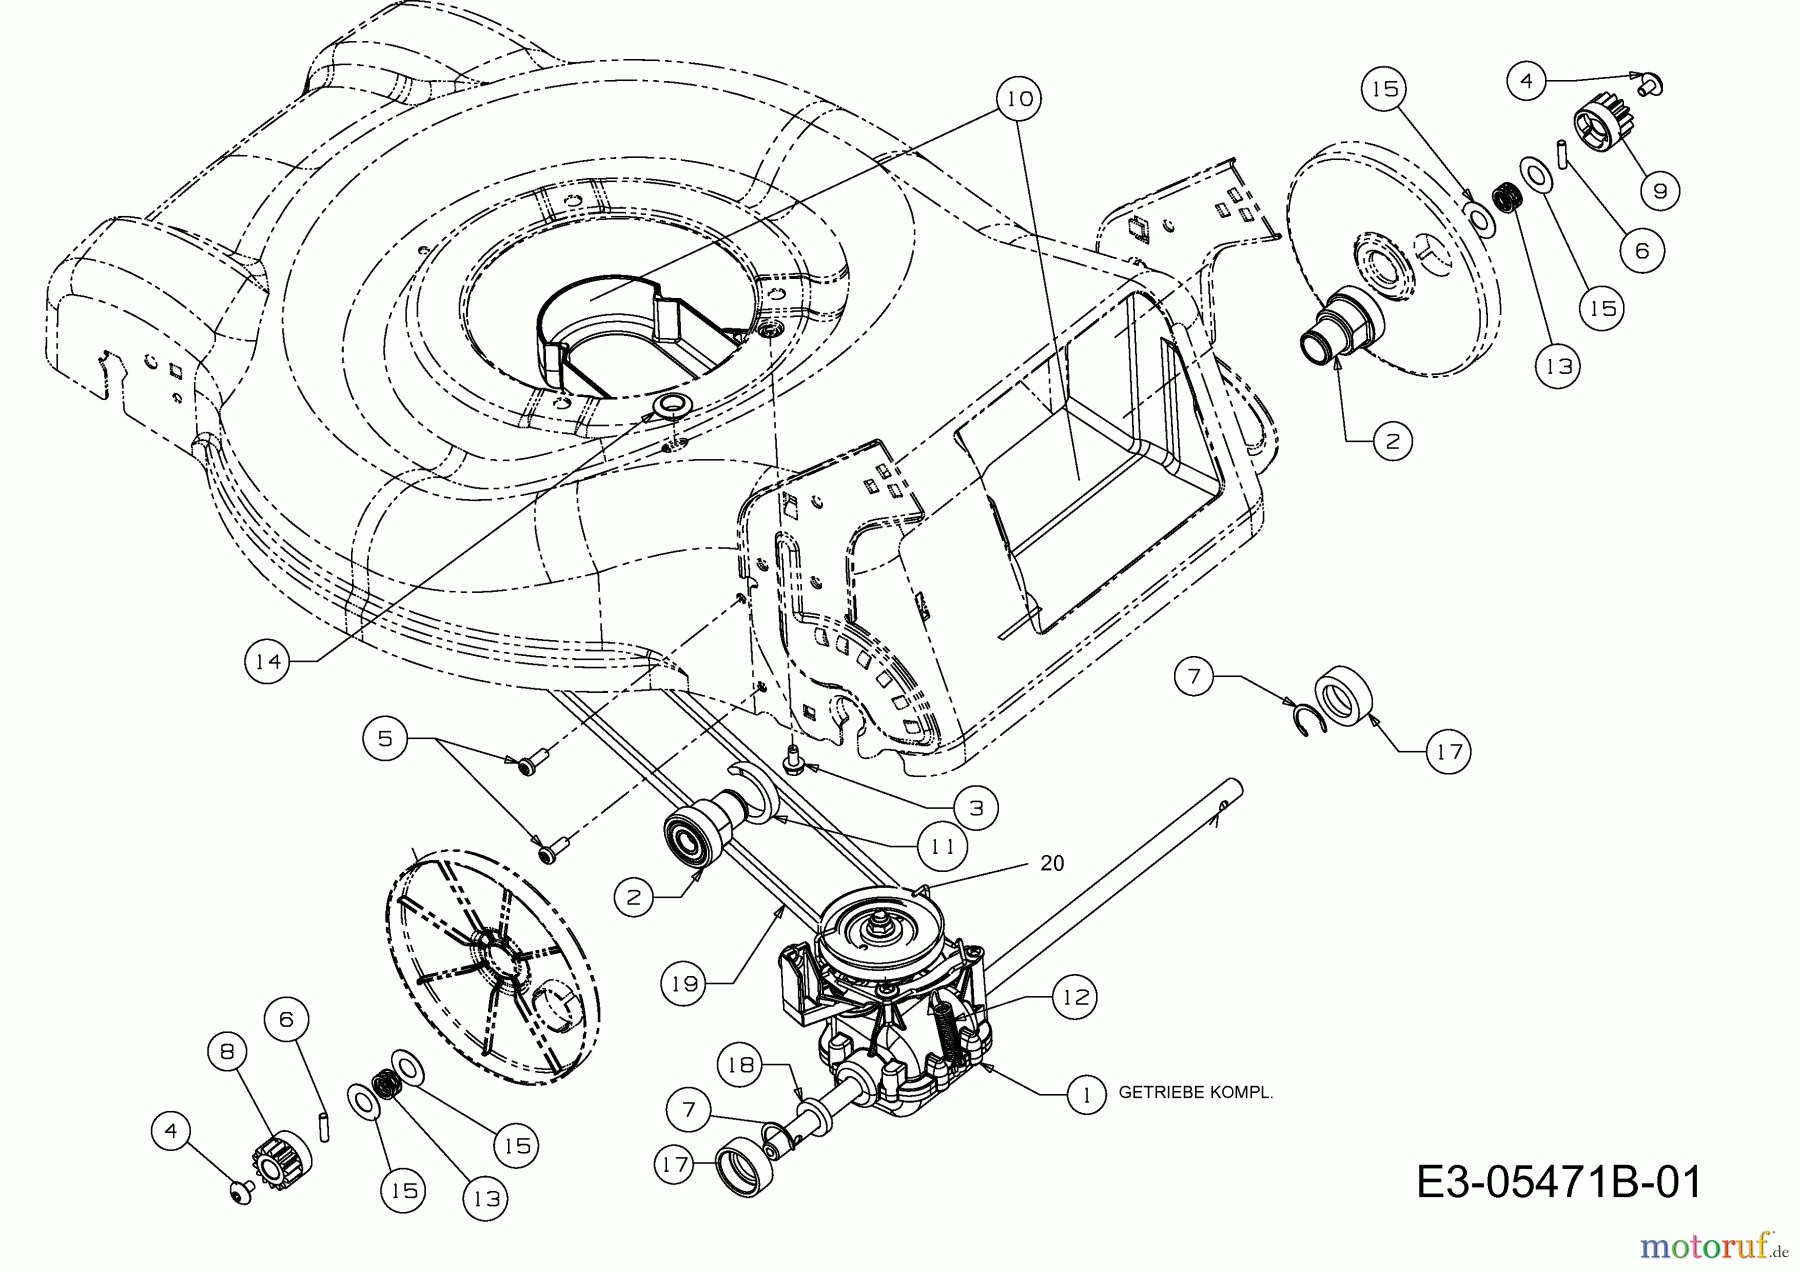  MTD Motormäher mit Antrieb SP 46 O 12D-J5M1615  (2012) Getriebe, Keilriemen